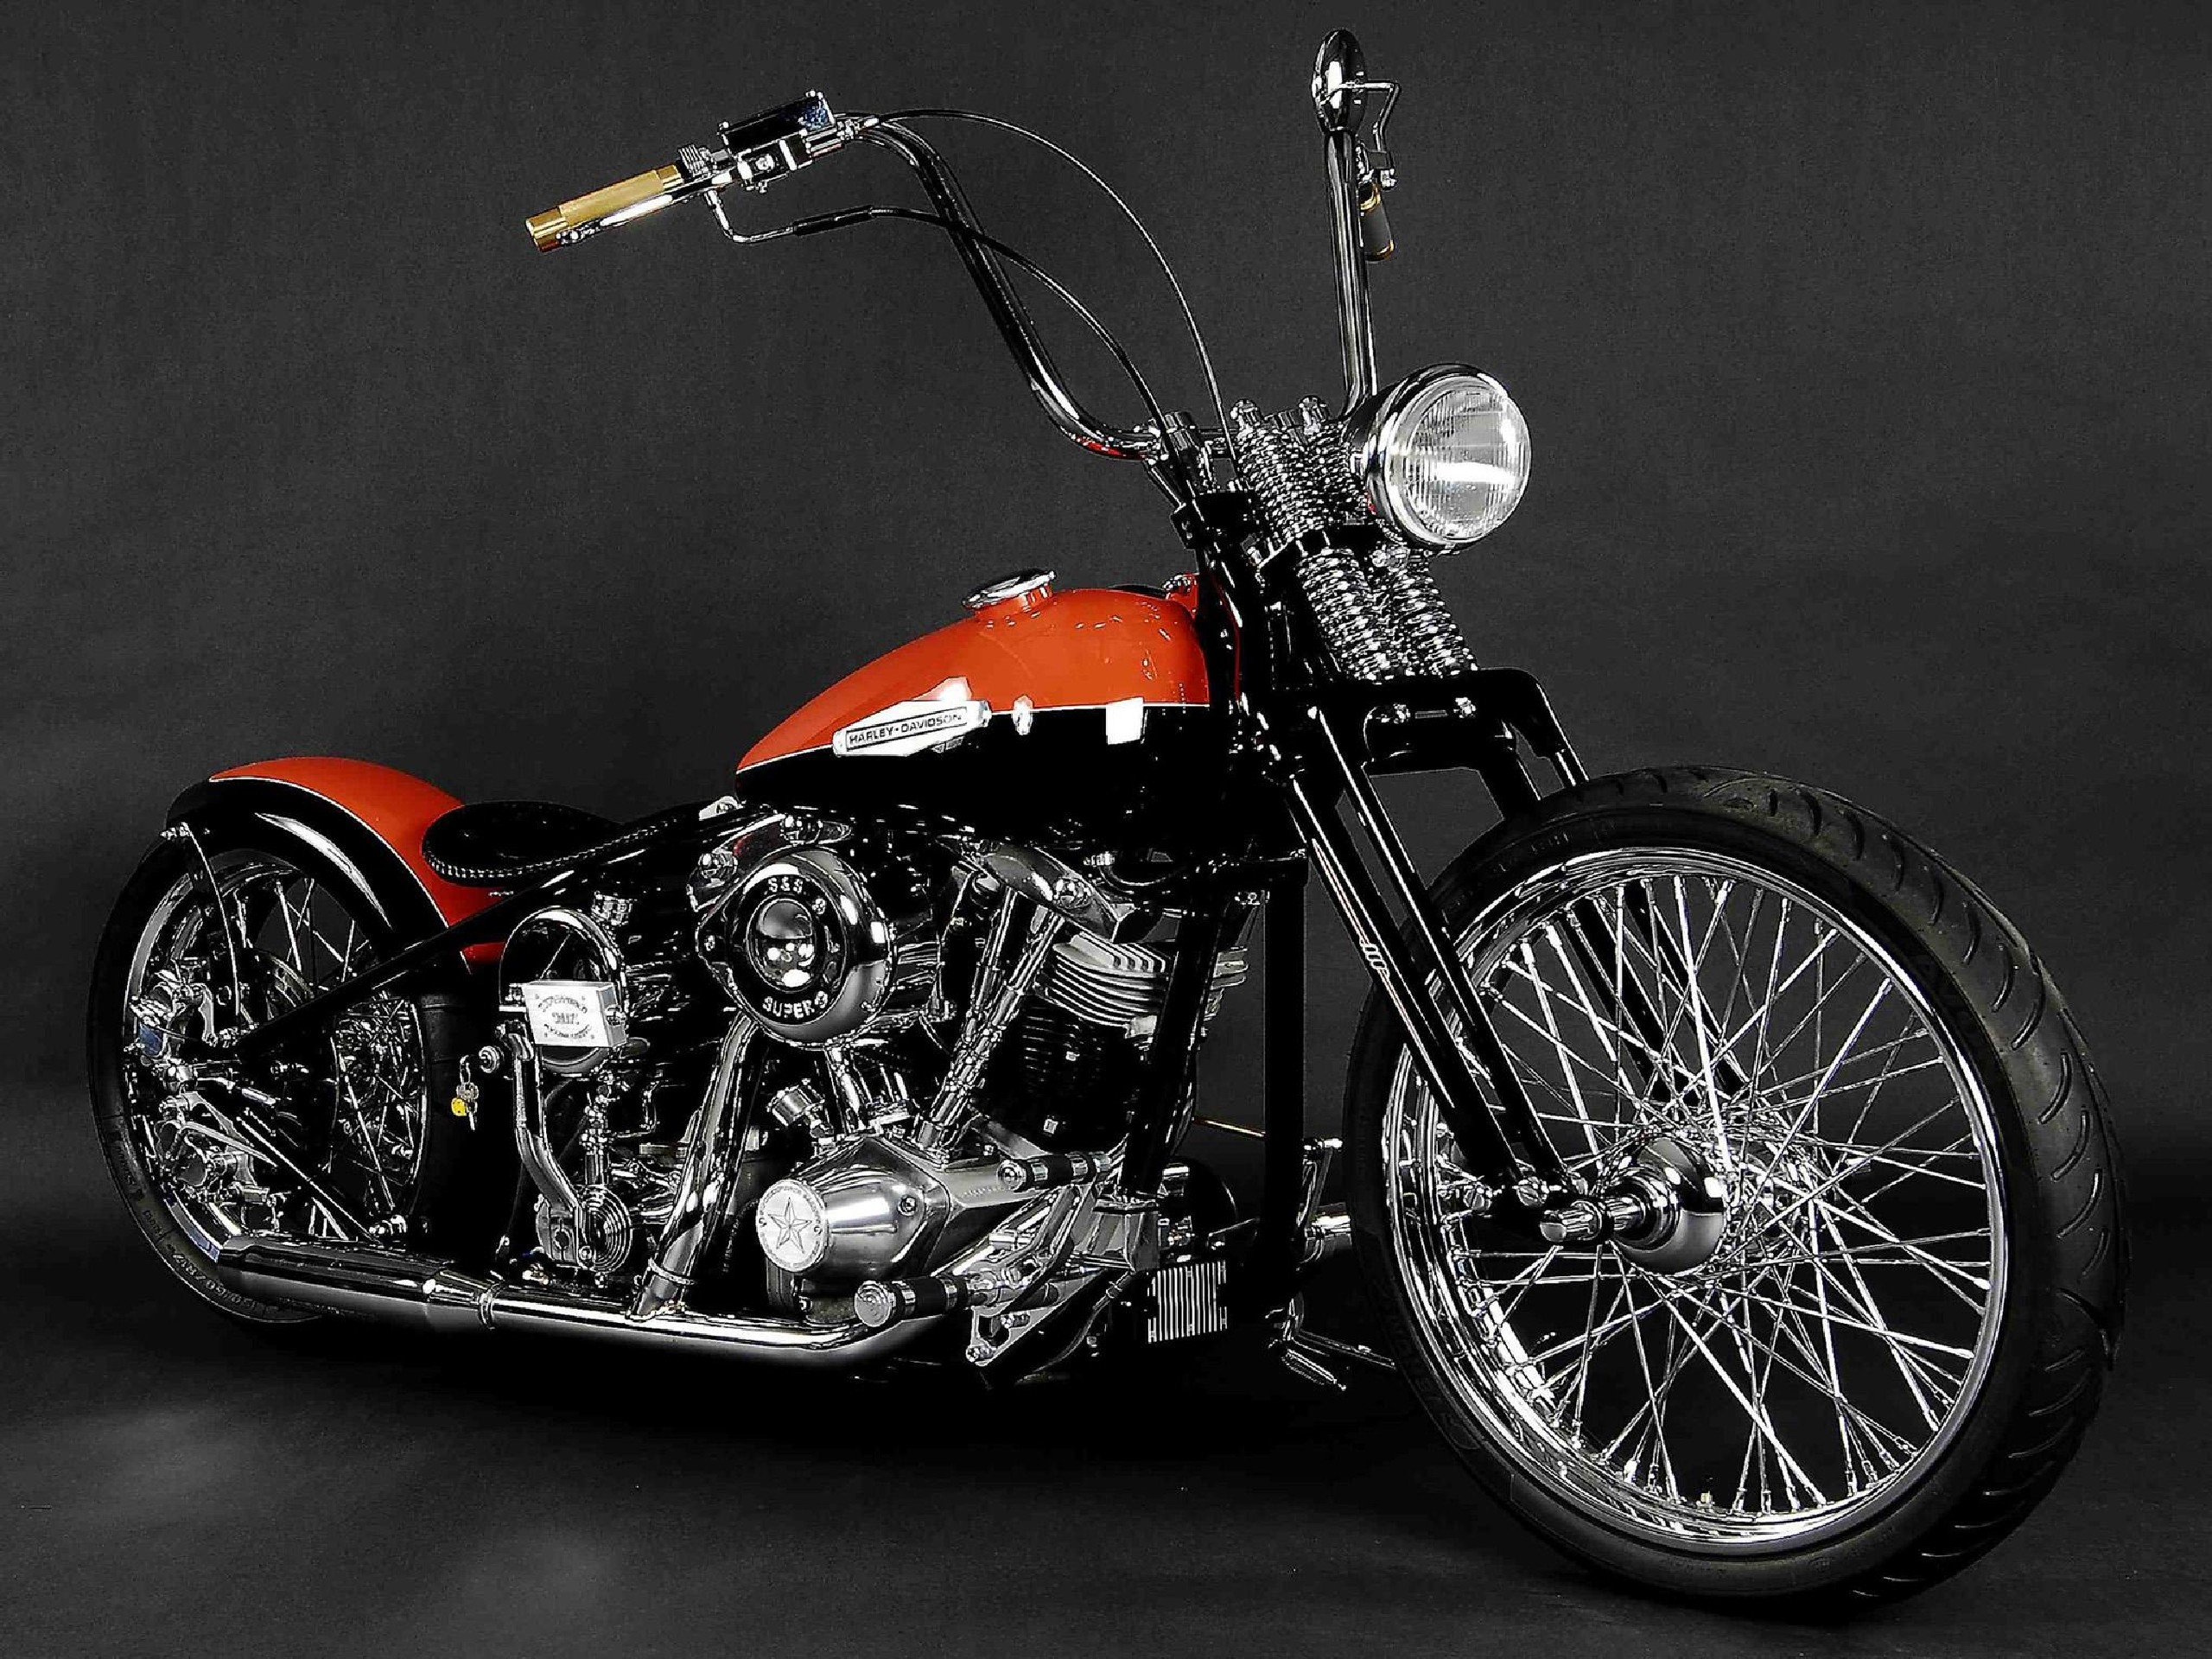 2560x1920 Vehicles - Harley-Davidson Motorcycle Wallpaper